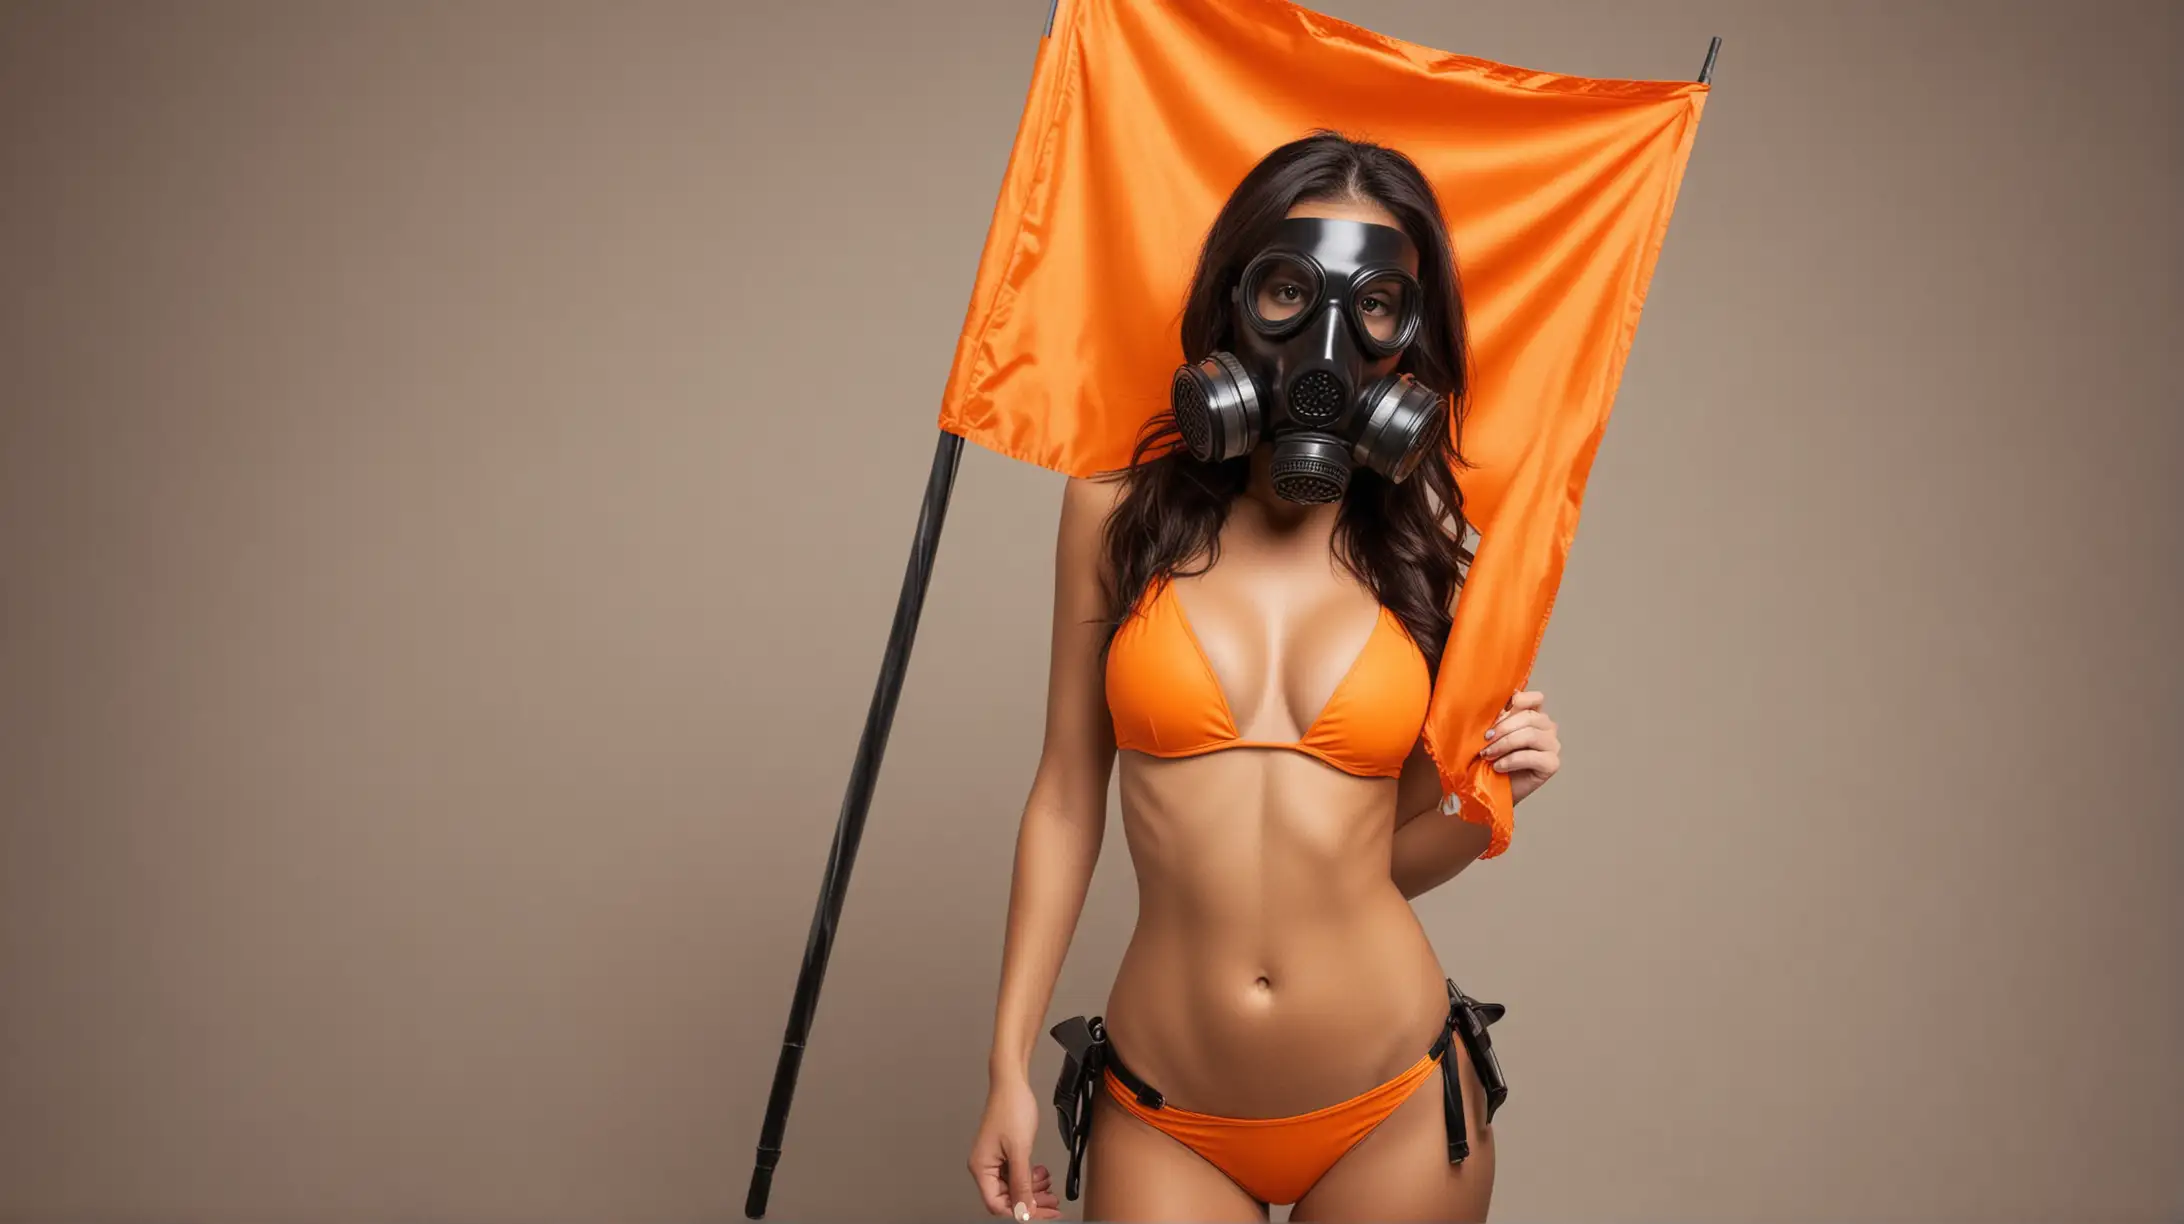 Latina with black gas mask  holding an orange flag. Orange bikini